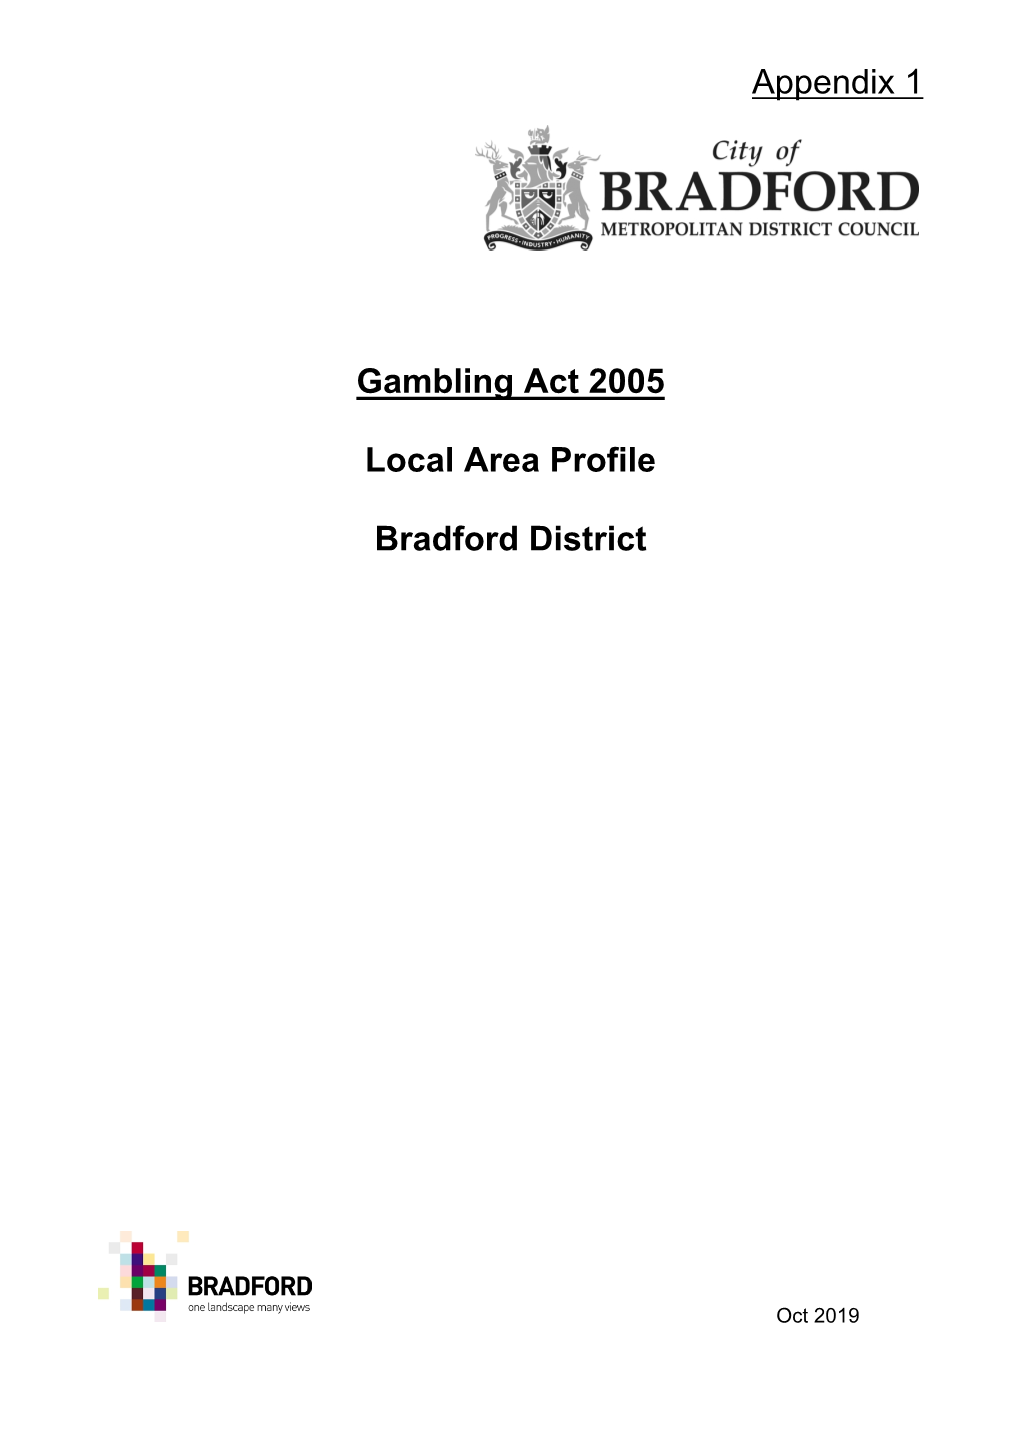 Gambling Act 2005 Local Area Profile Bradford District